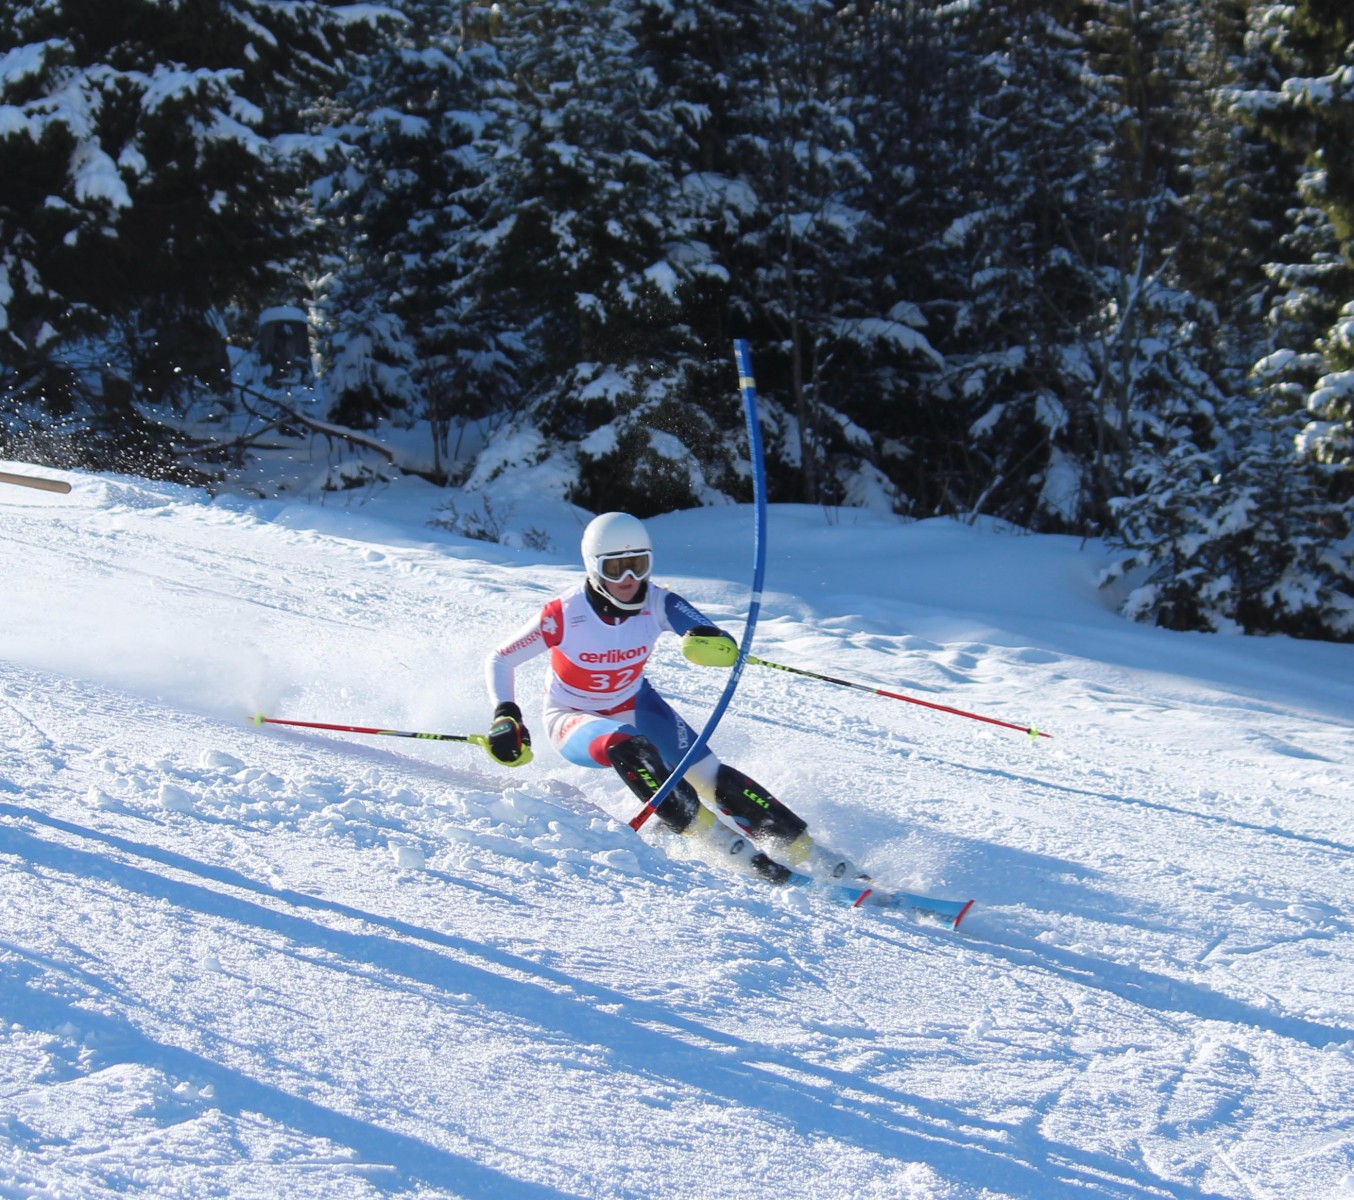 Successful ski racer Thea Waldleben at the FIS Slalom Sörenberg race, February 2016. Source: Thea Waldleben